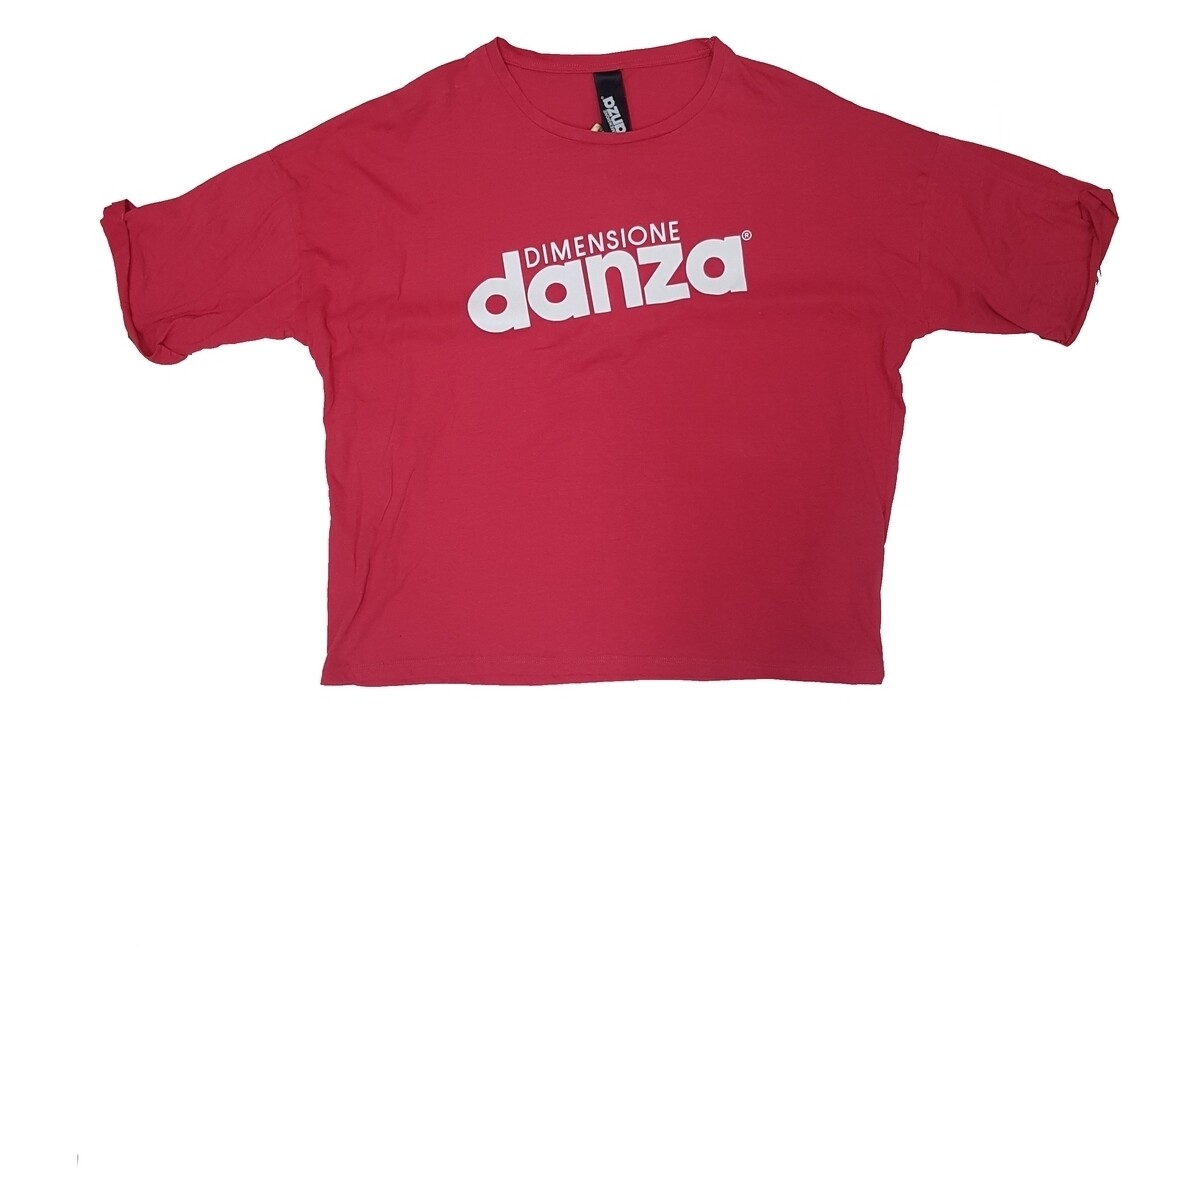 Kleidung Damen T-Shirts Dimensione Danza DZ2A355G90 Rot